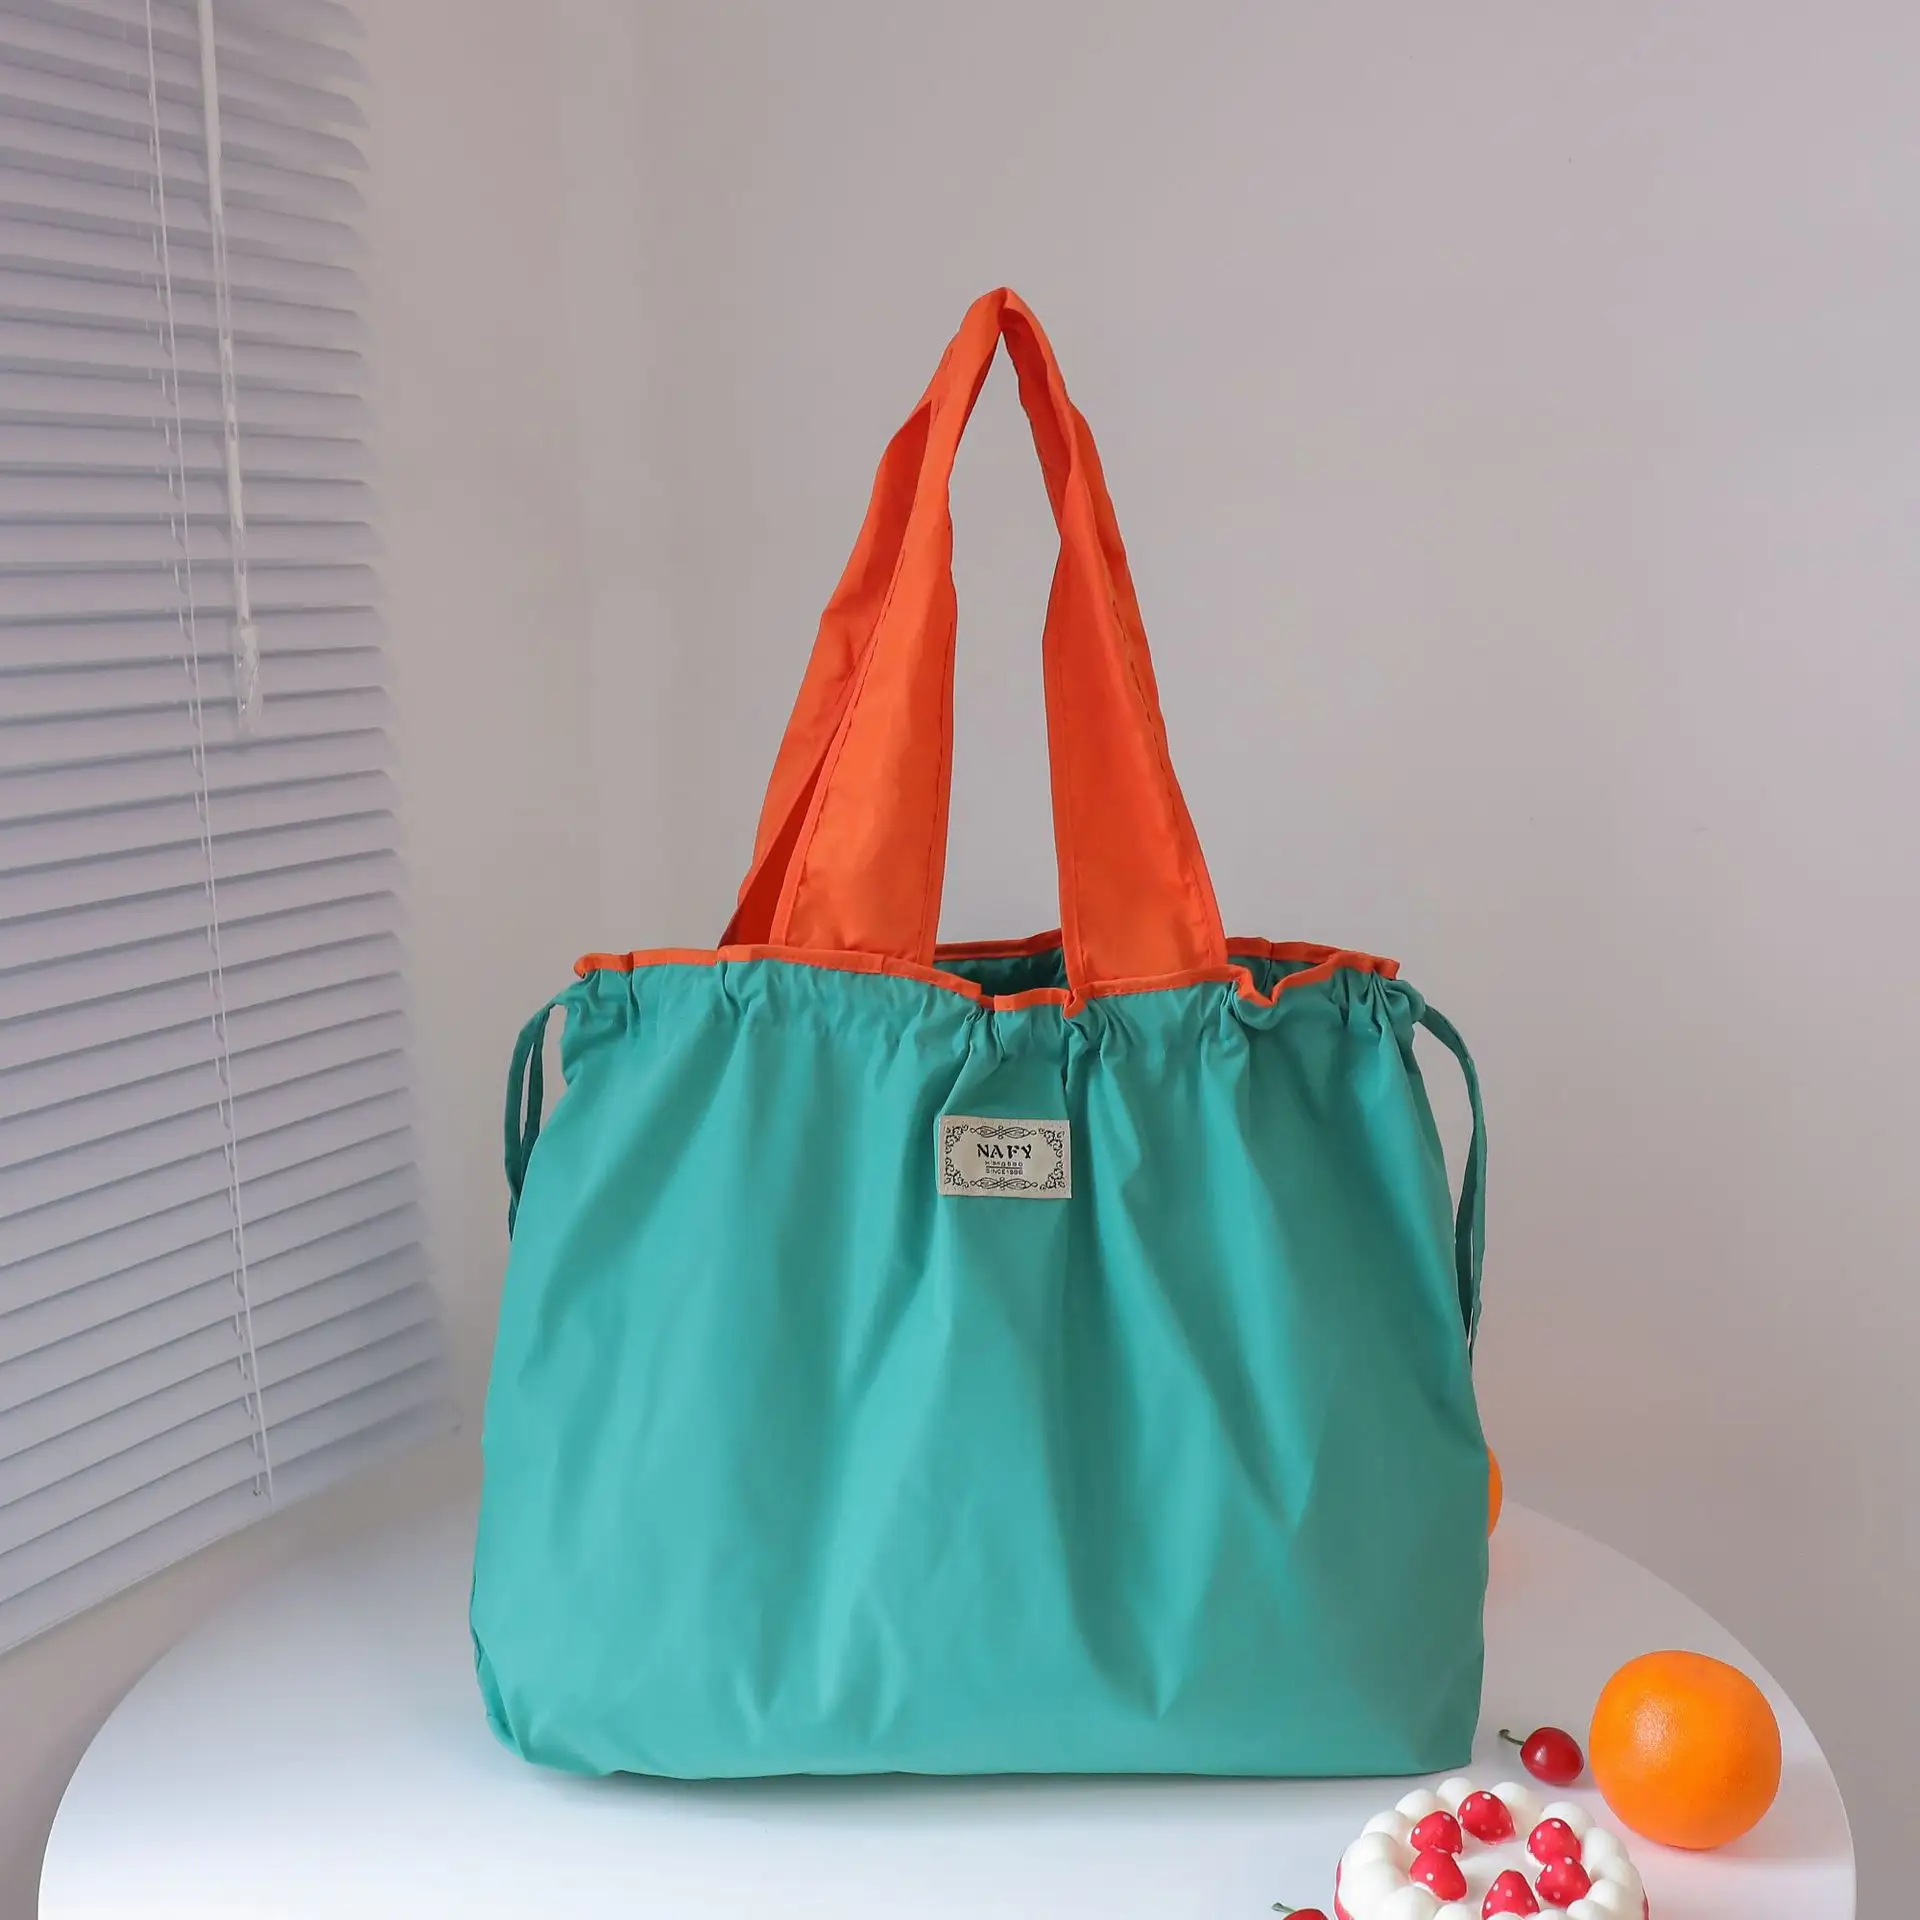 Best Selling Larger Capacity Reusable Shopping Bag Foldable Shoulder Handbag Portable Supermarket Shopping Bag For Girls Women